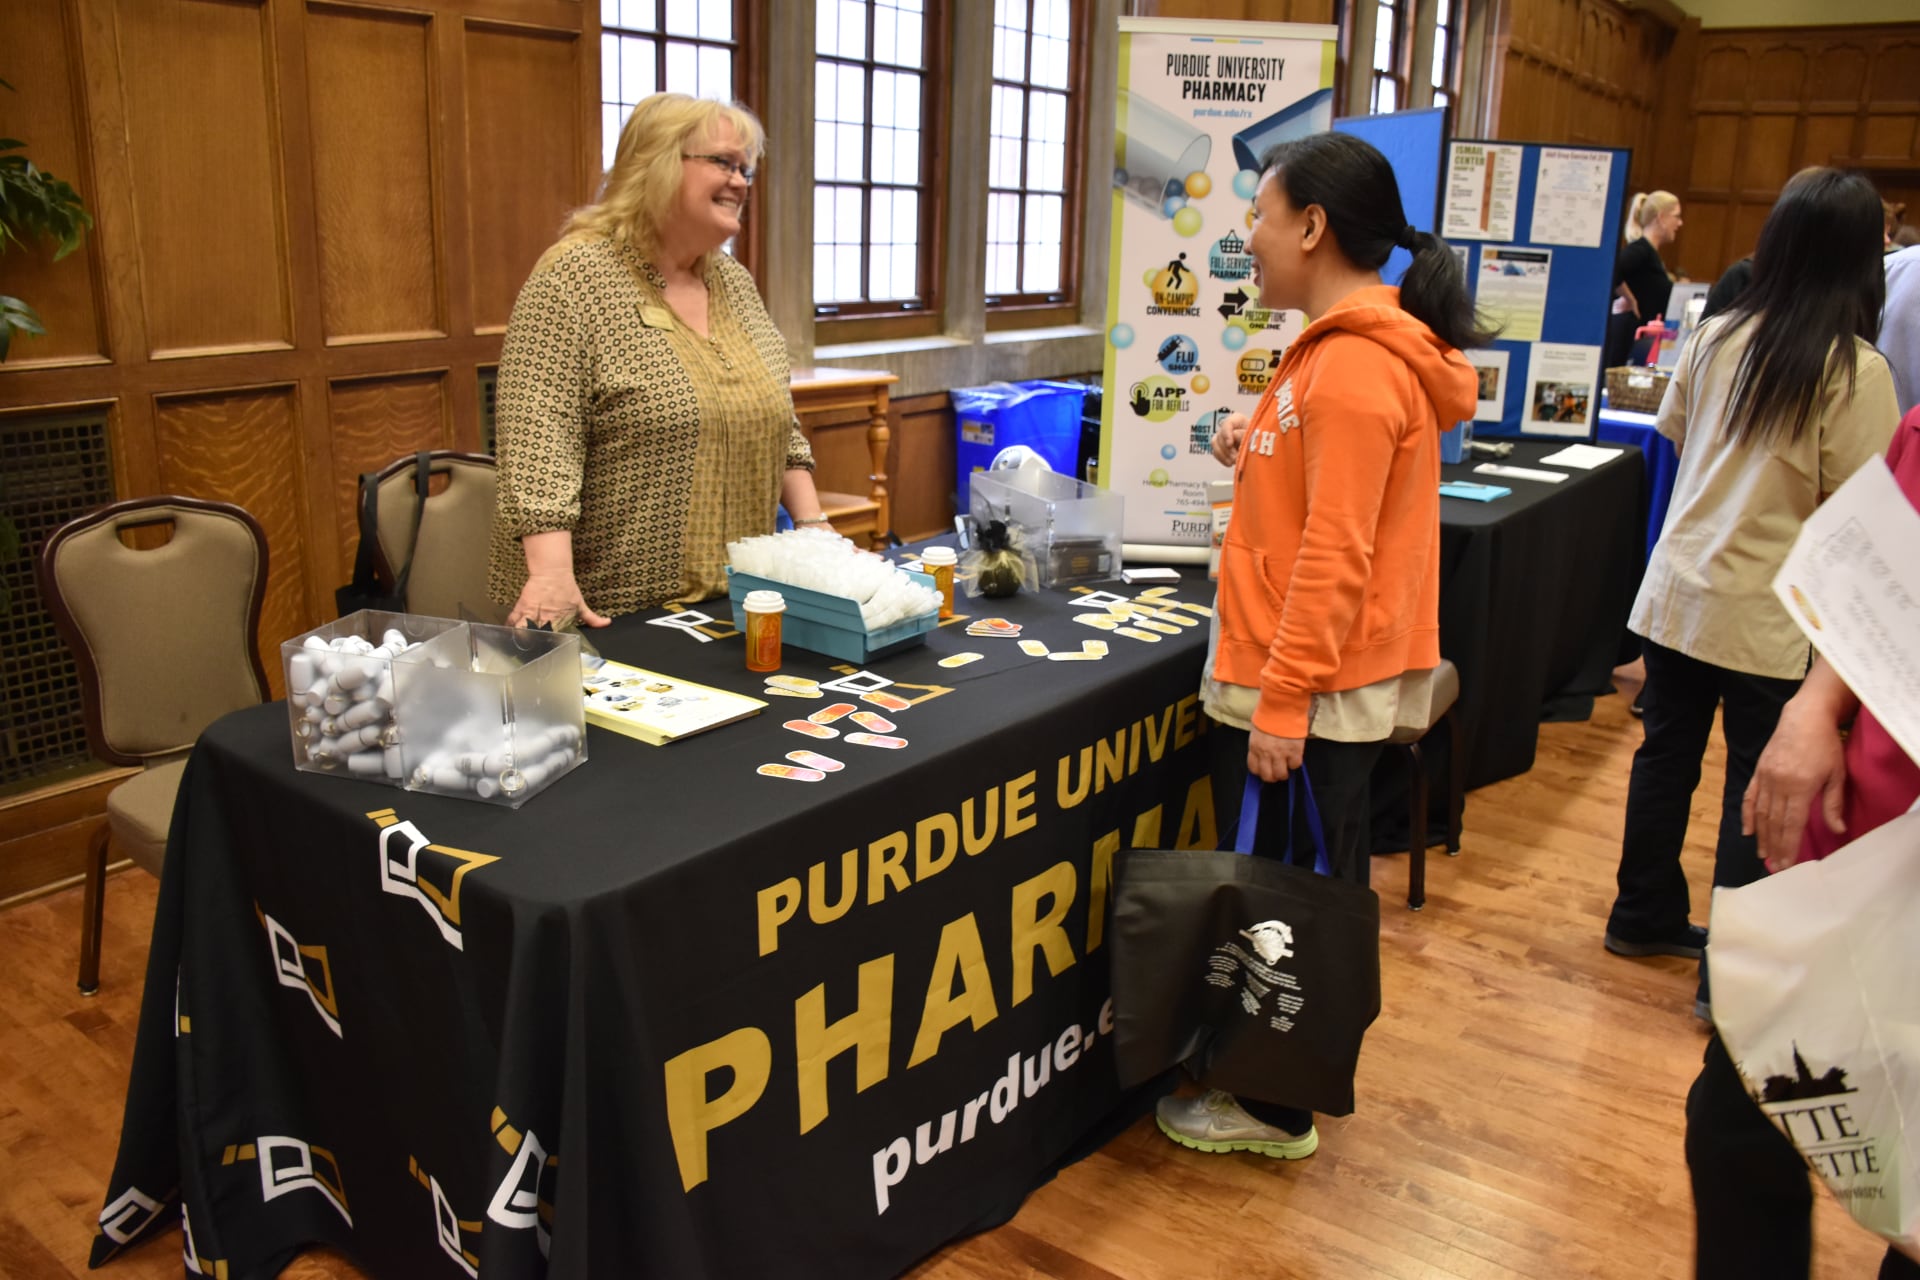 Purdue University Pharmacy provided a drug take-back service